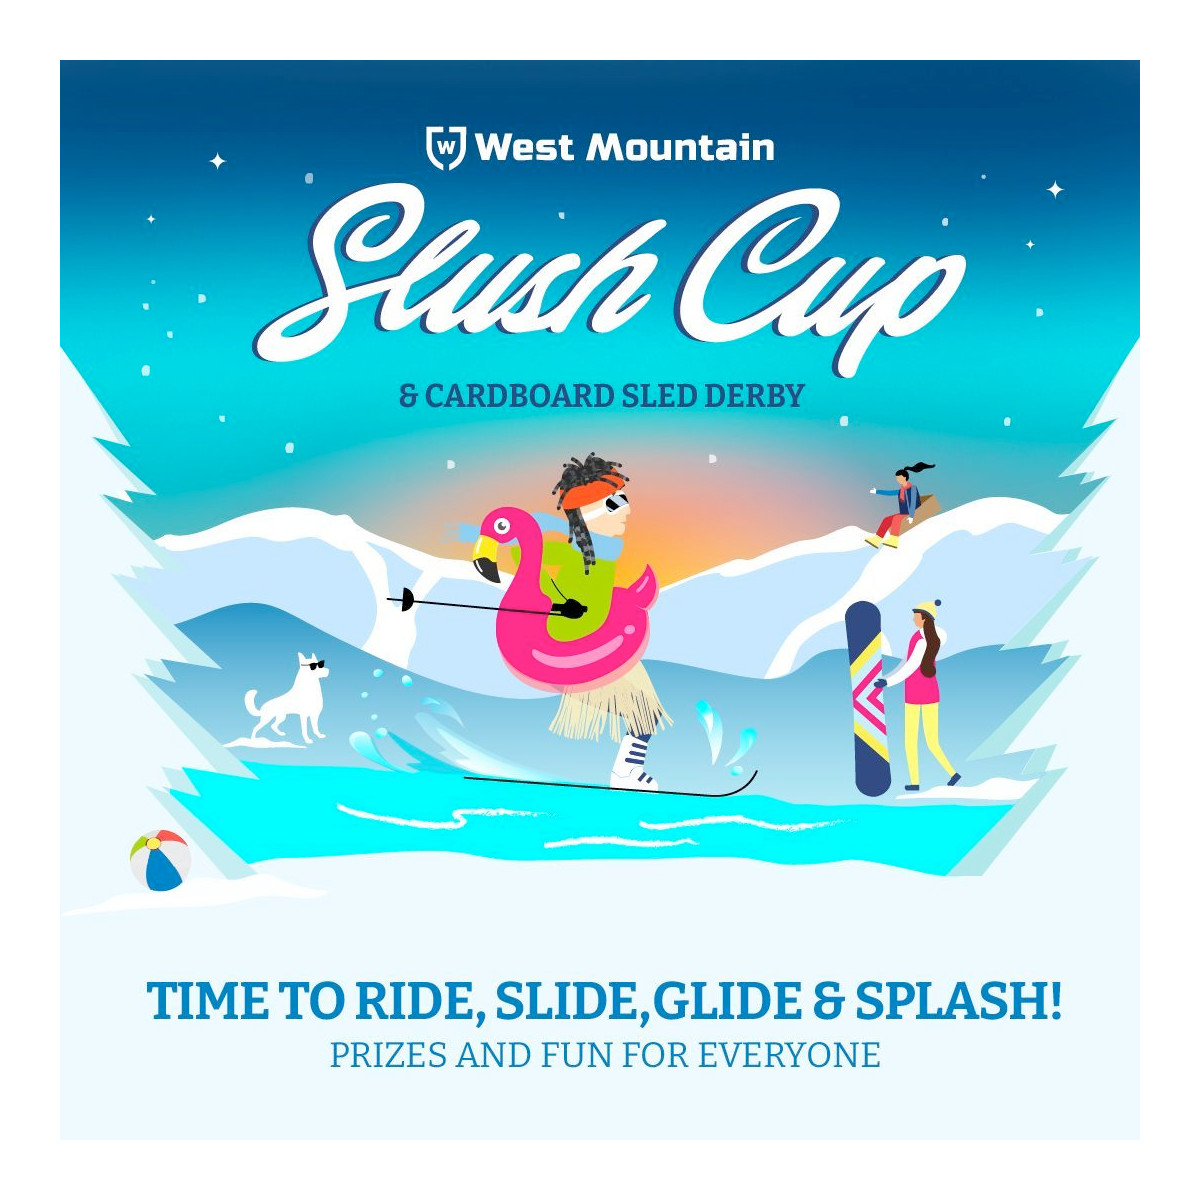 West Mountain Slush Cup